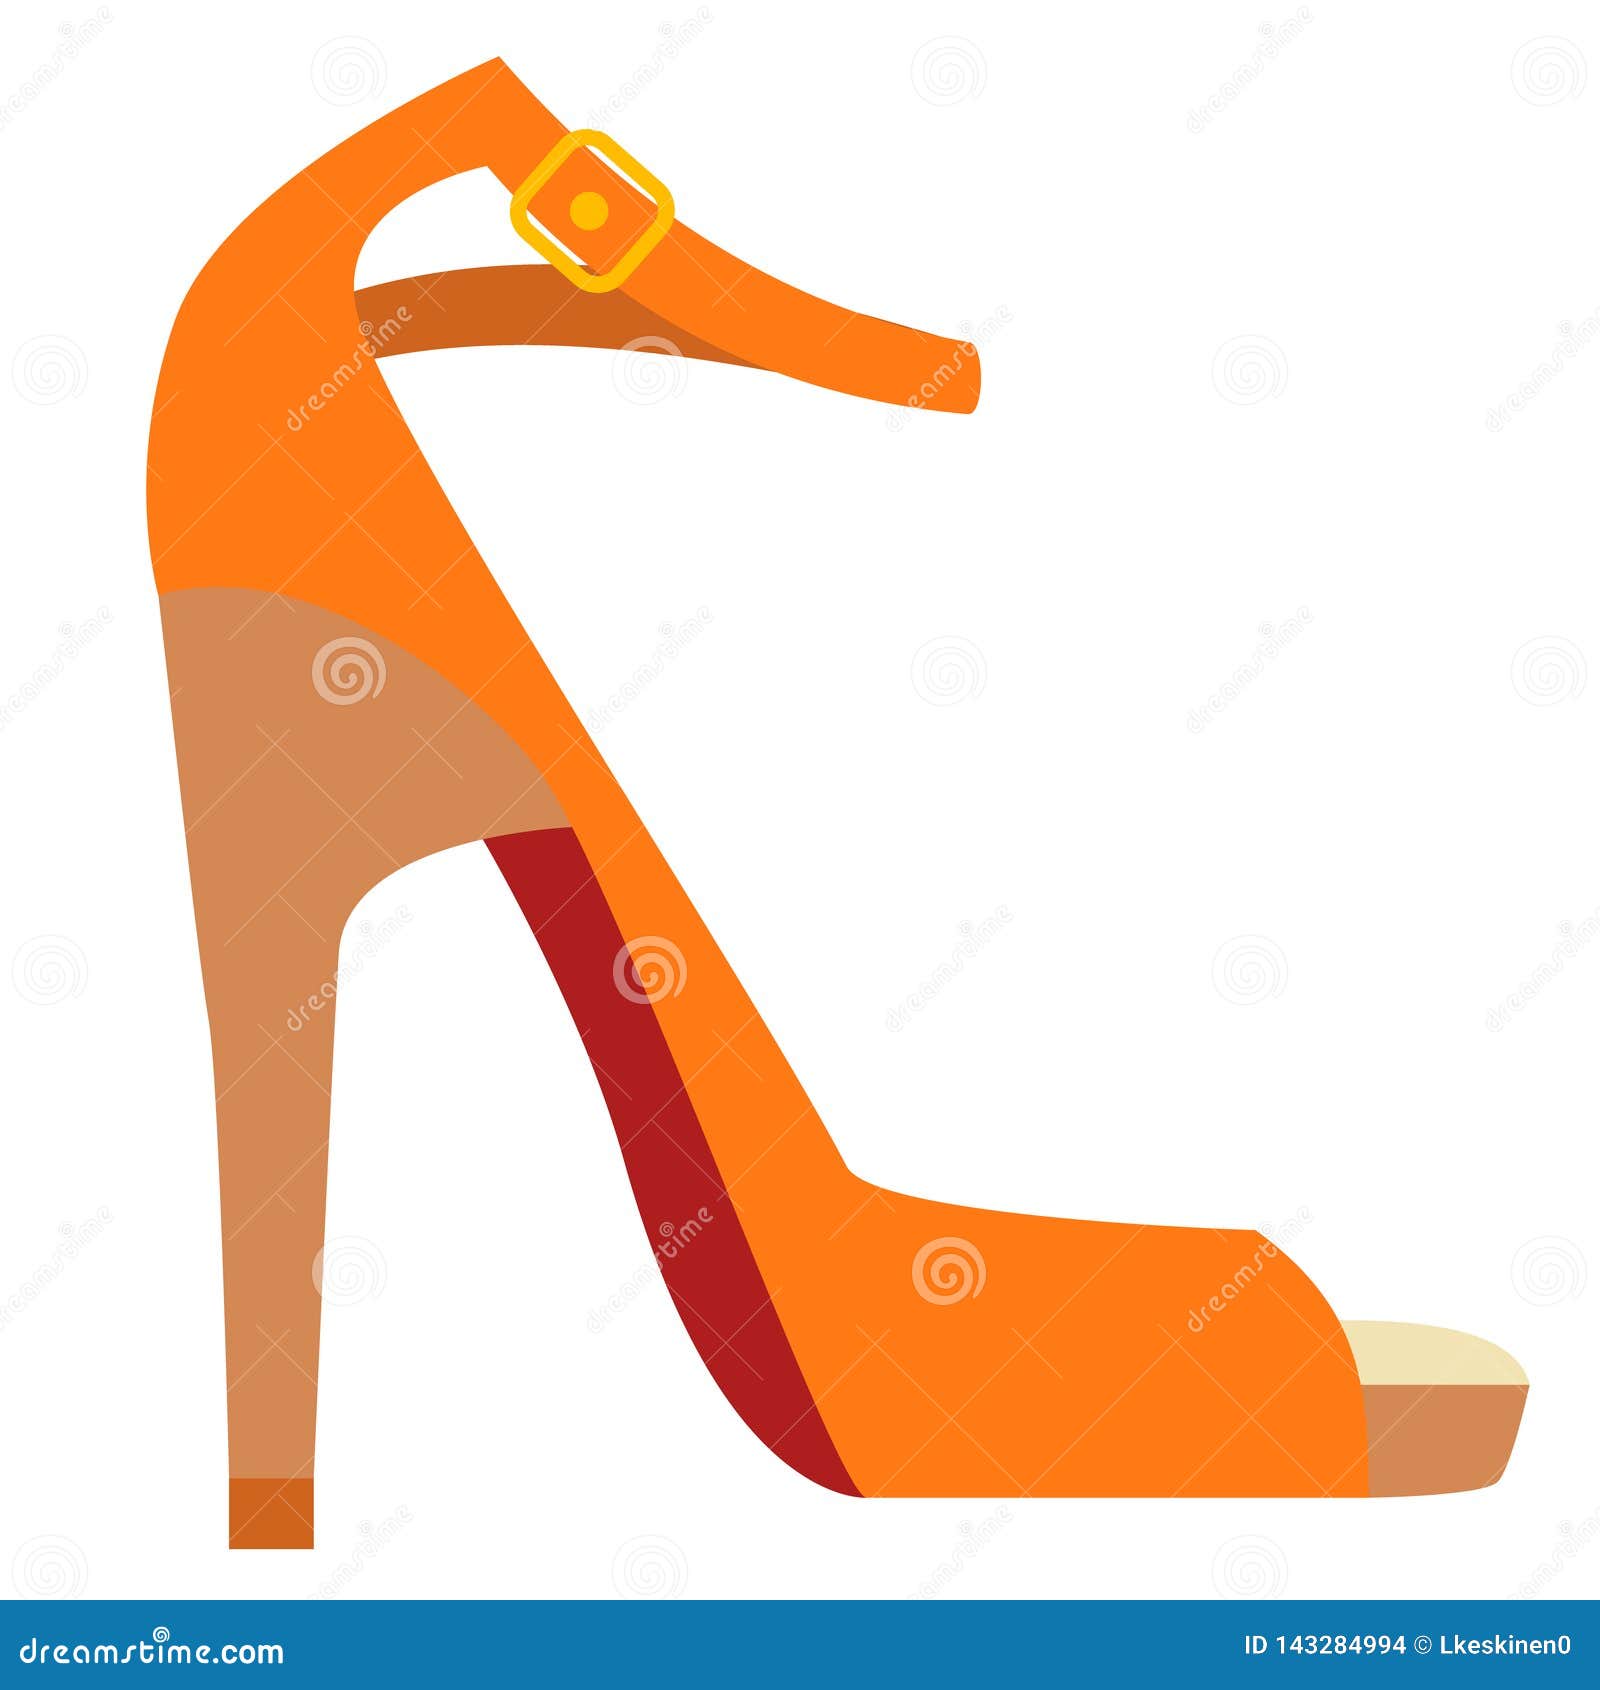 Orange Shoe Flat Illustration on White Stock Vector - Illustration of ...